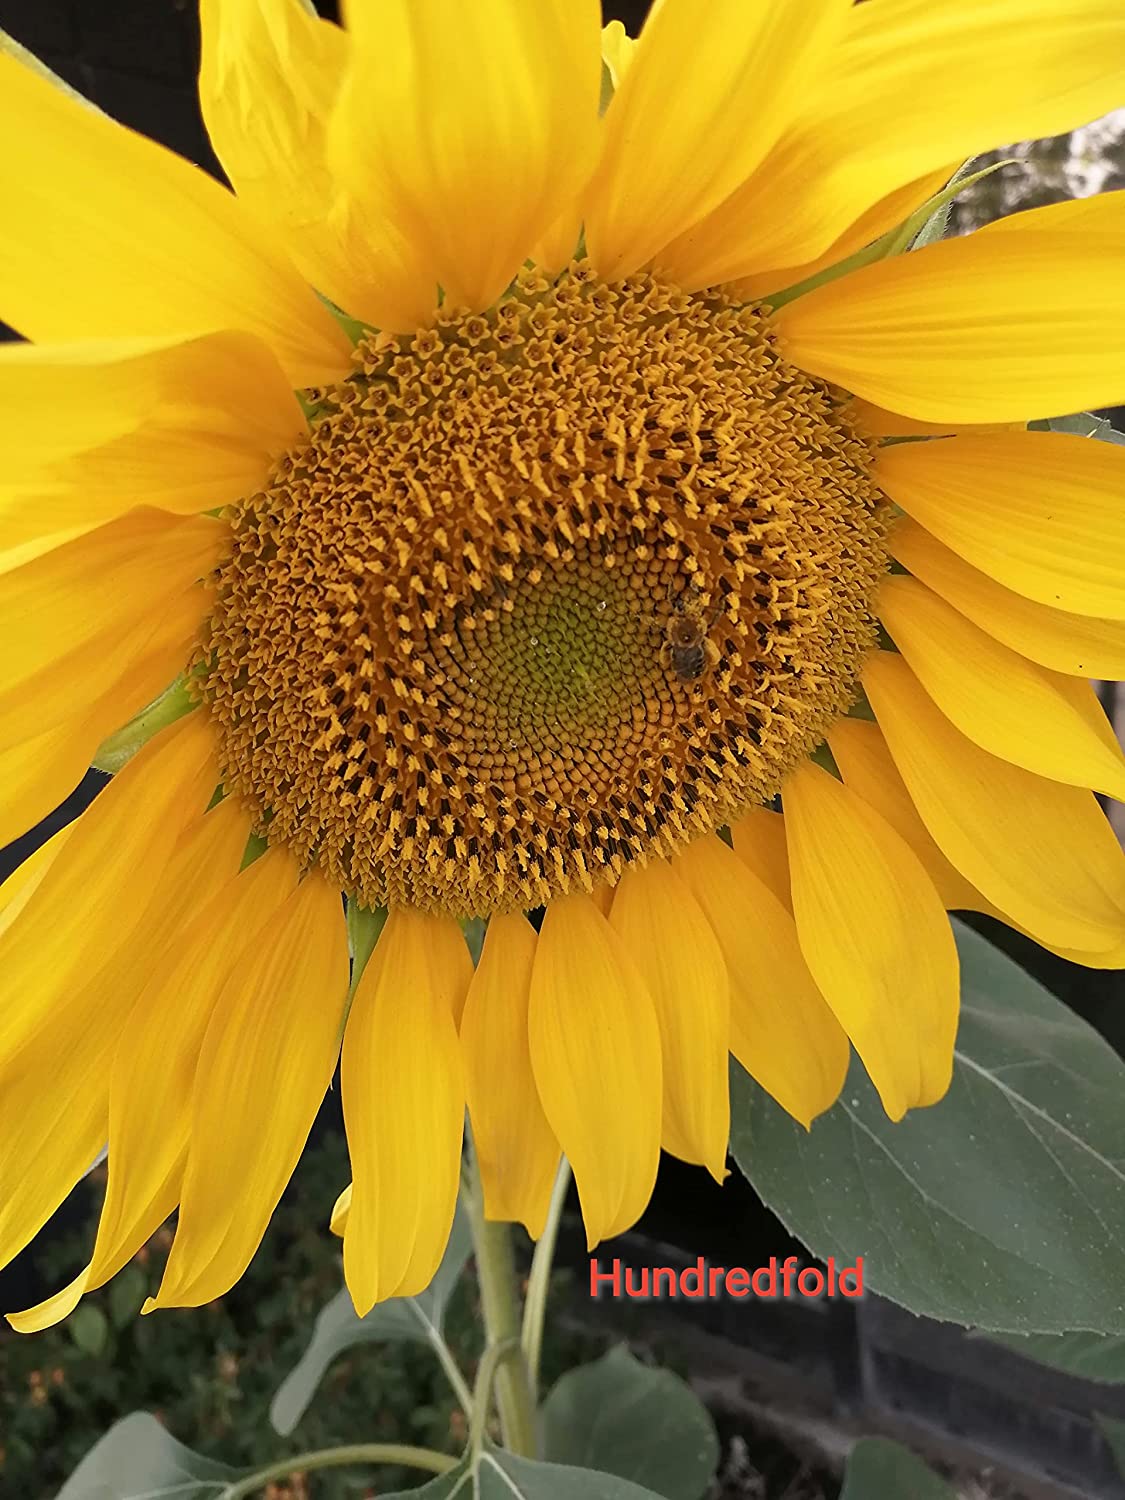 Mammoth Grey Stripe Giant Sunflower 20 Heirloom Seeds - Helianthus annuus Attract Songbirds Song Birds and Honeybees Bees